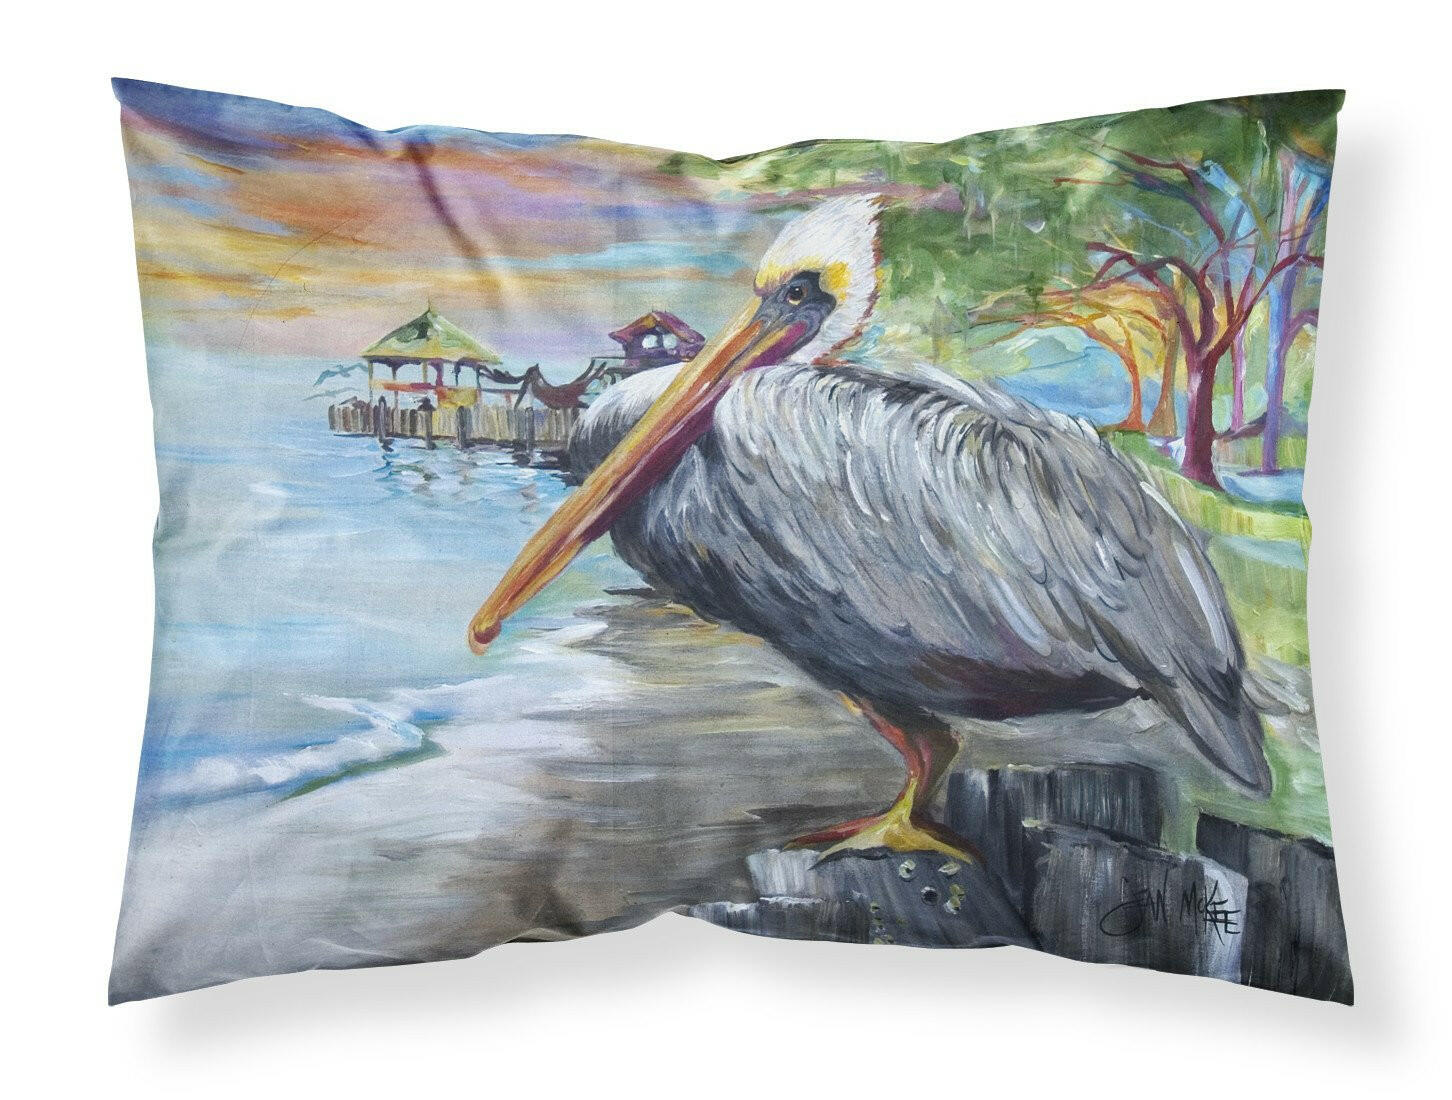 Pelican view Fabric Standard Pillowcase JMK1021PILLOWCASE by Caroline's Treasures